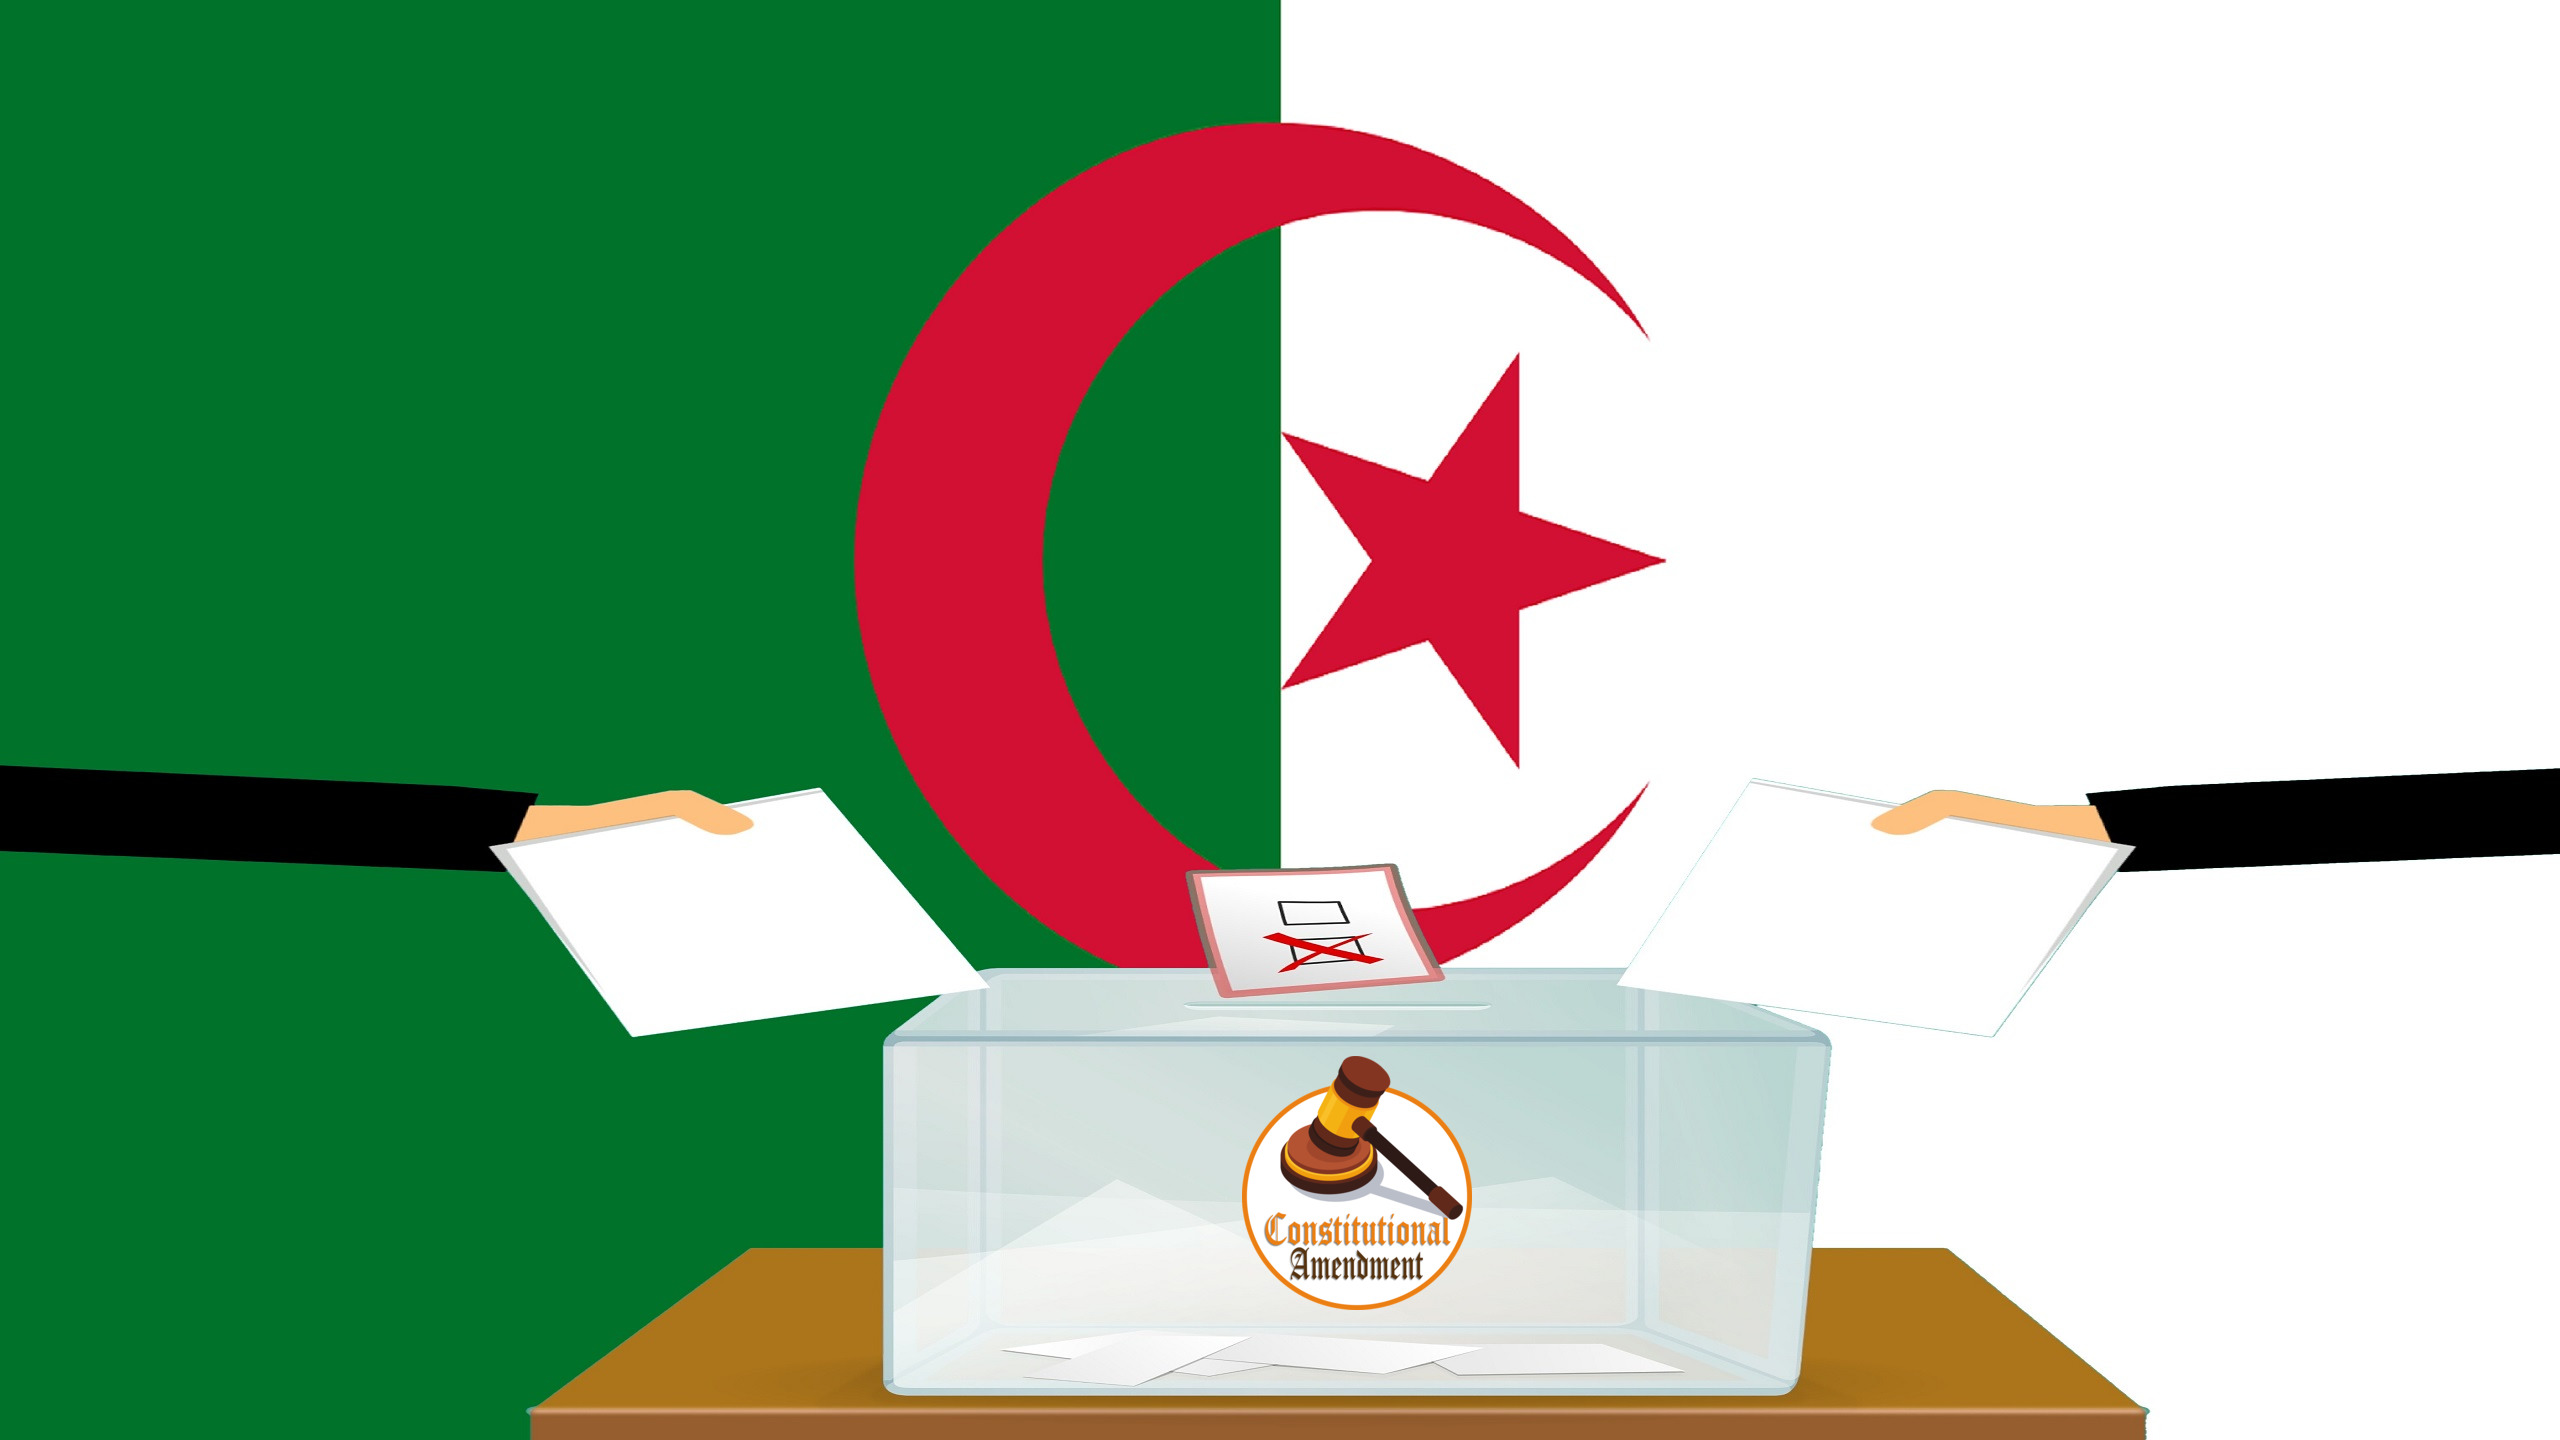 Algeria Approves Ambiguous Amendment Amid Anti-Government Anger